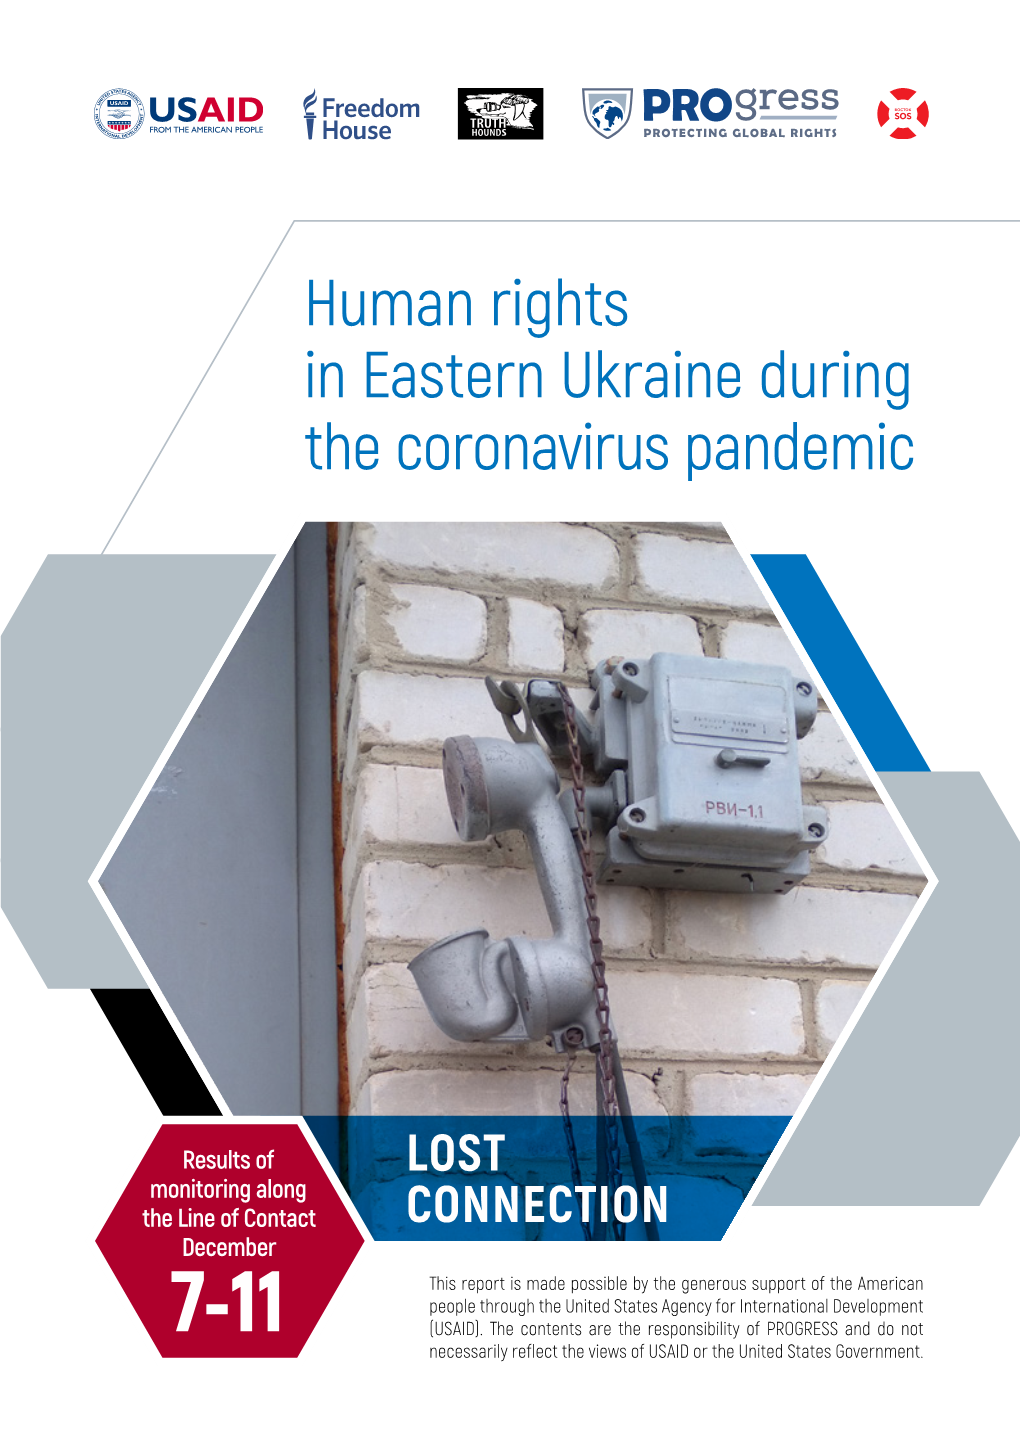 Human Rights in Eastern Ukraine During the Coronavirus Pandemic